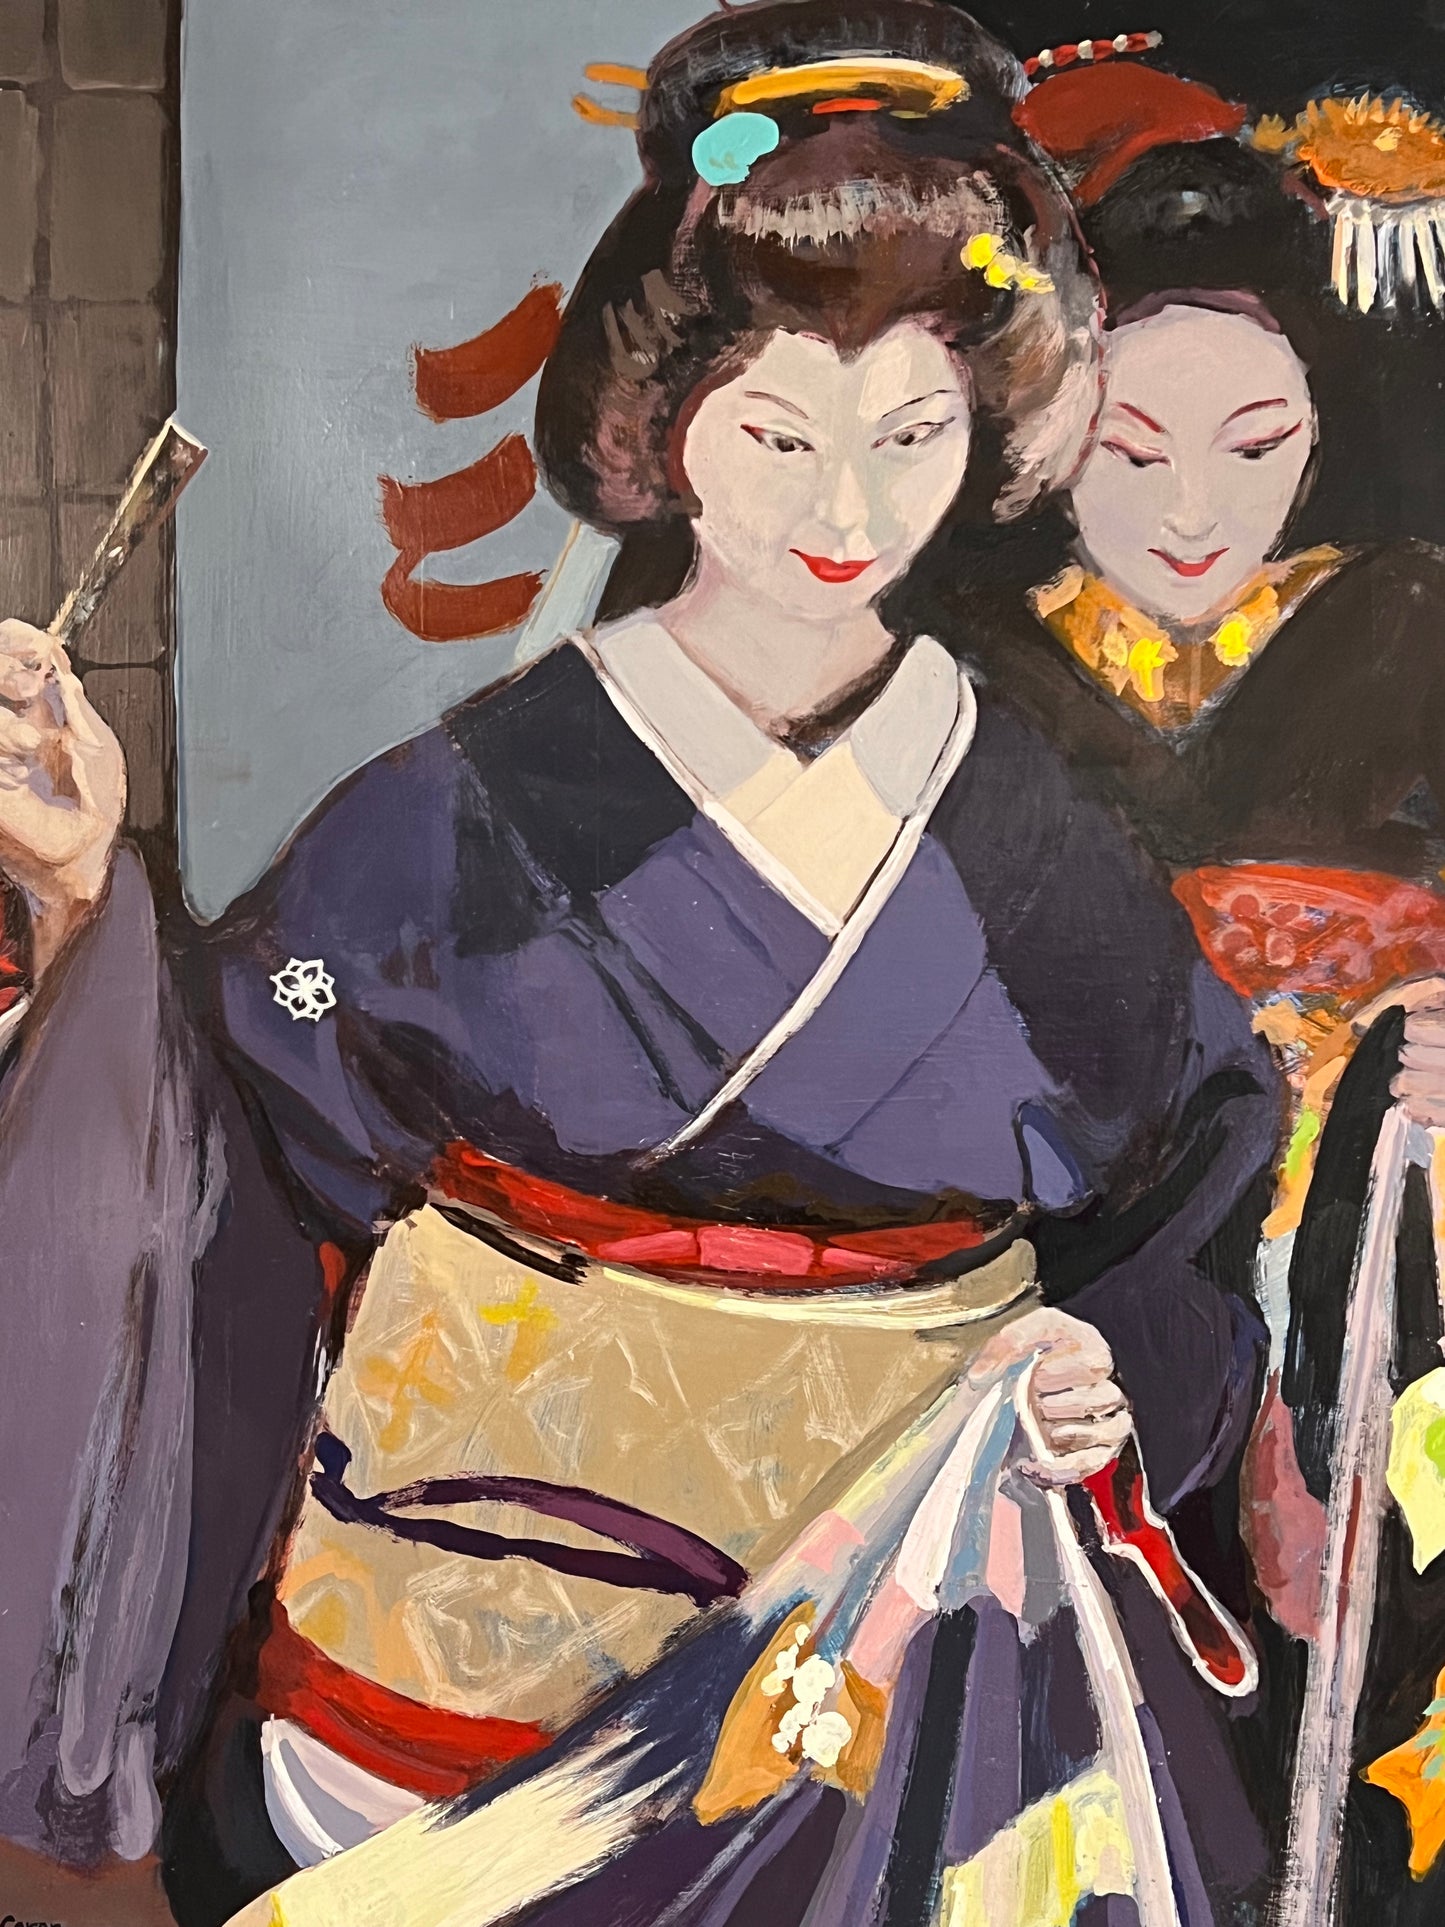 Sidonie Caron Framed Original Painting "A Geisha and a Maiko" 37.5"x48"